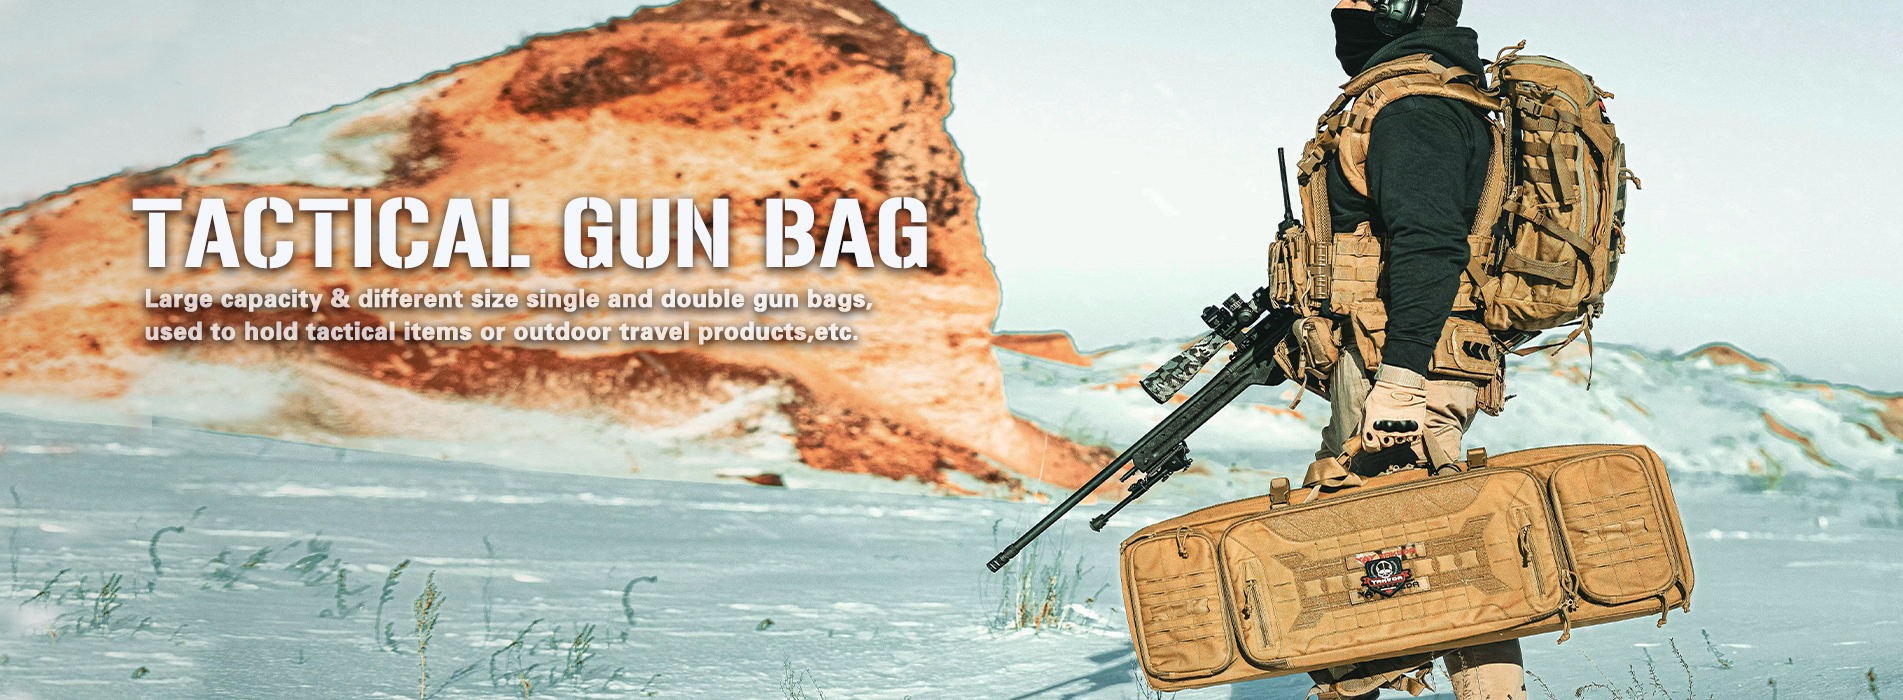 Yakeda tactical gun case backpack riffle double range bags